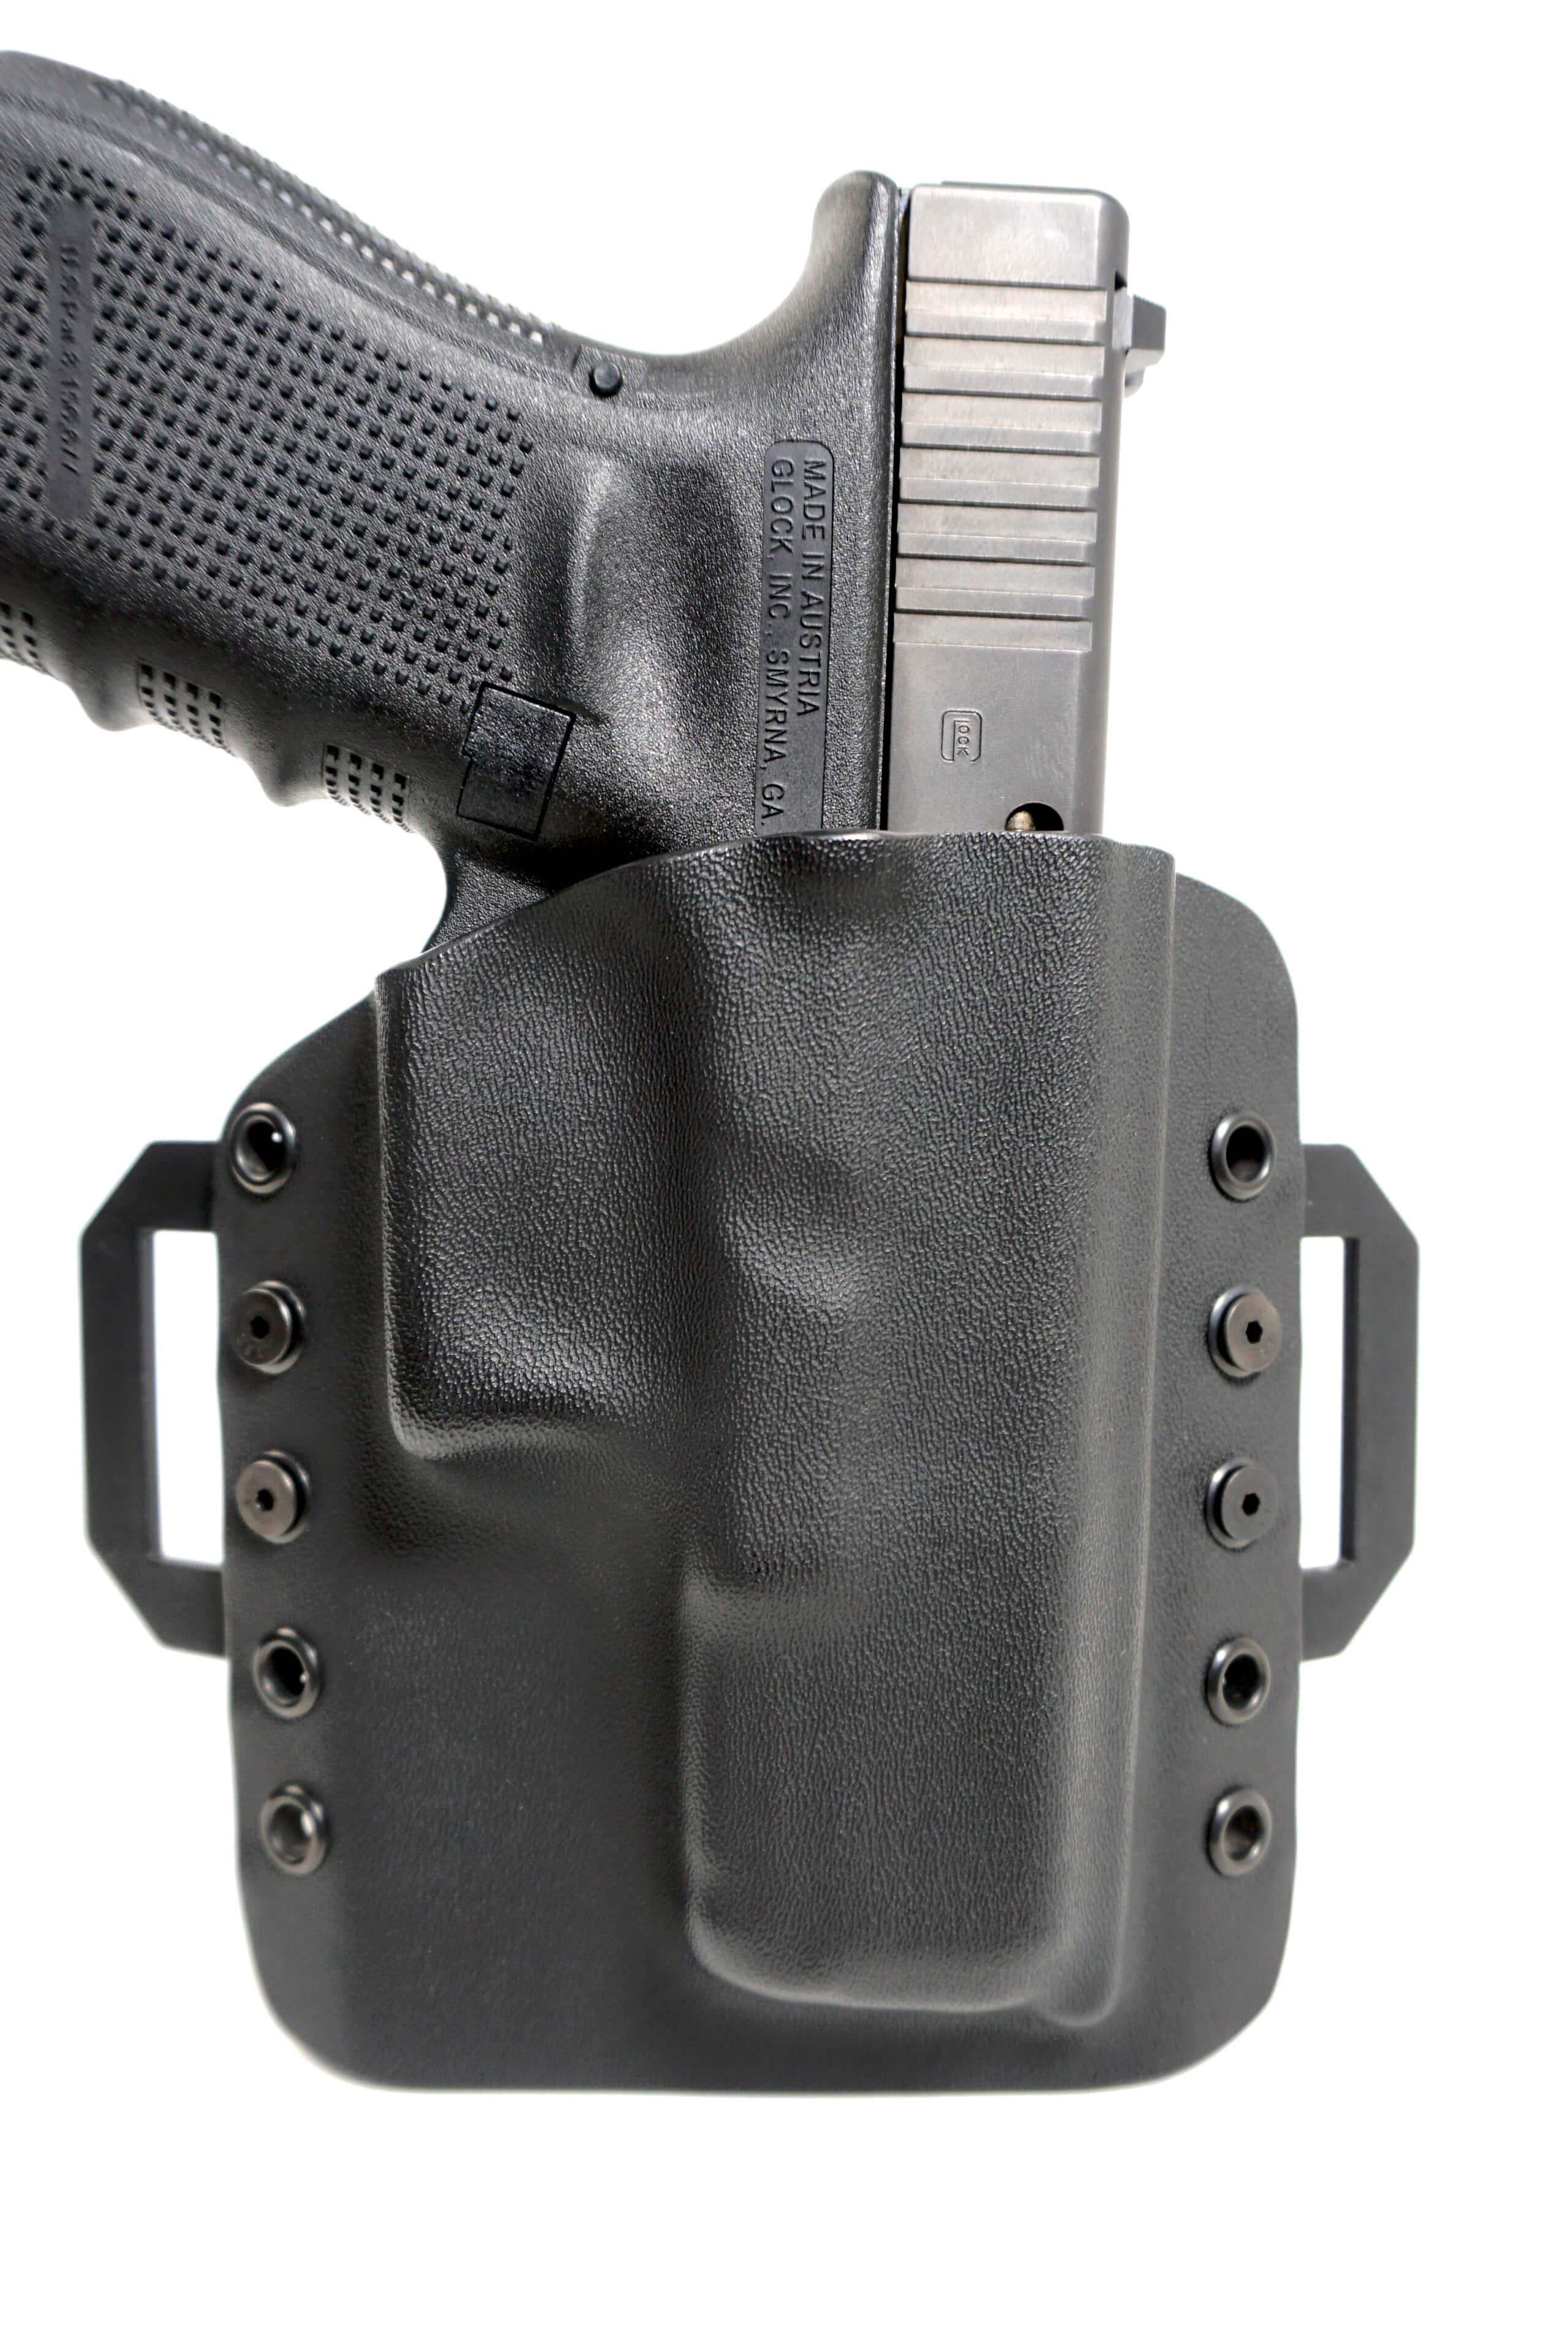 Glock 19 / 23 OWB Kydex Holster - Made in U.S.A. - Lifetime Warranty